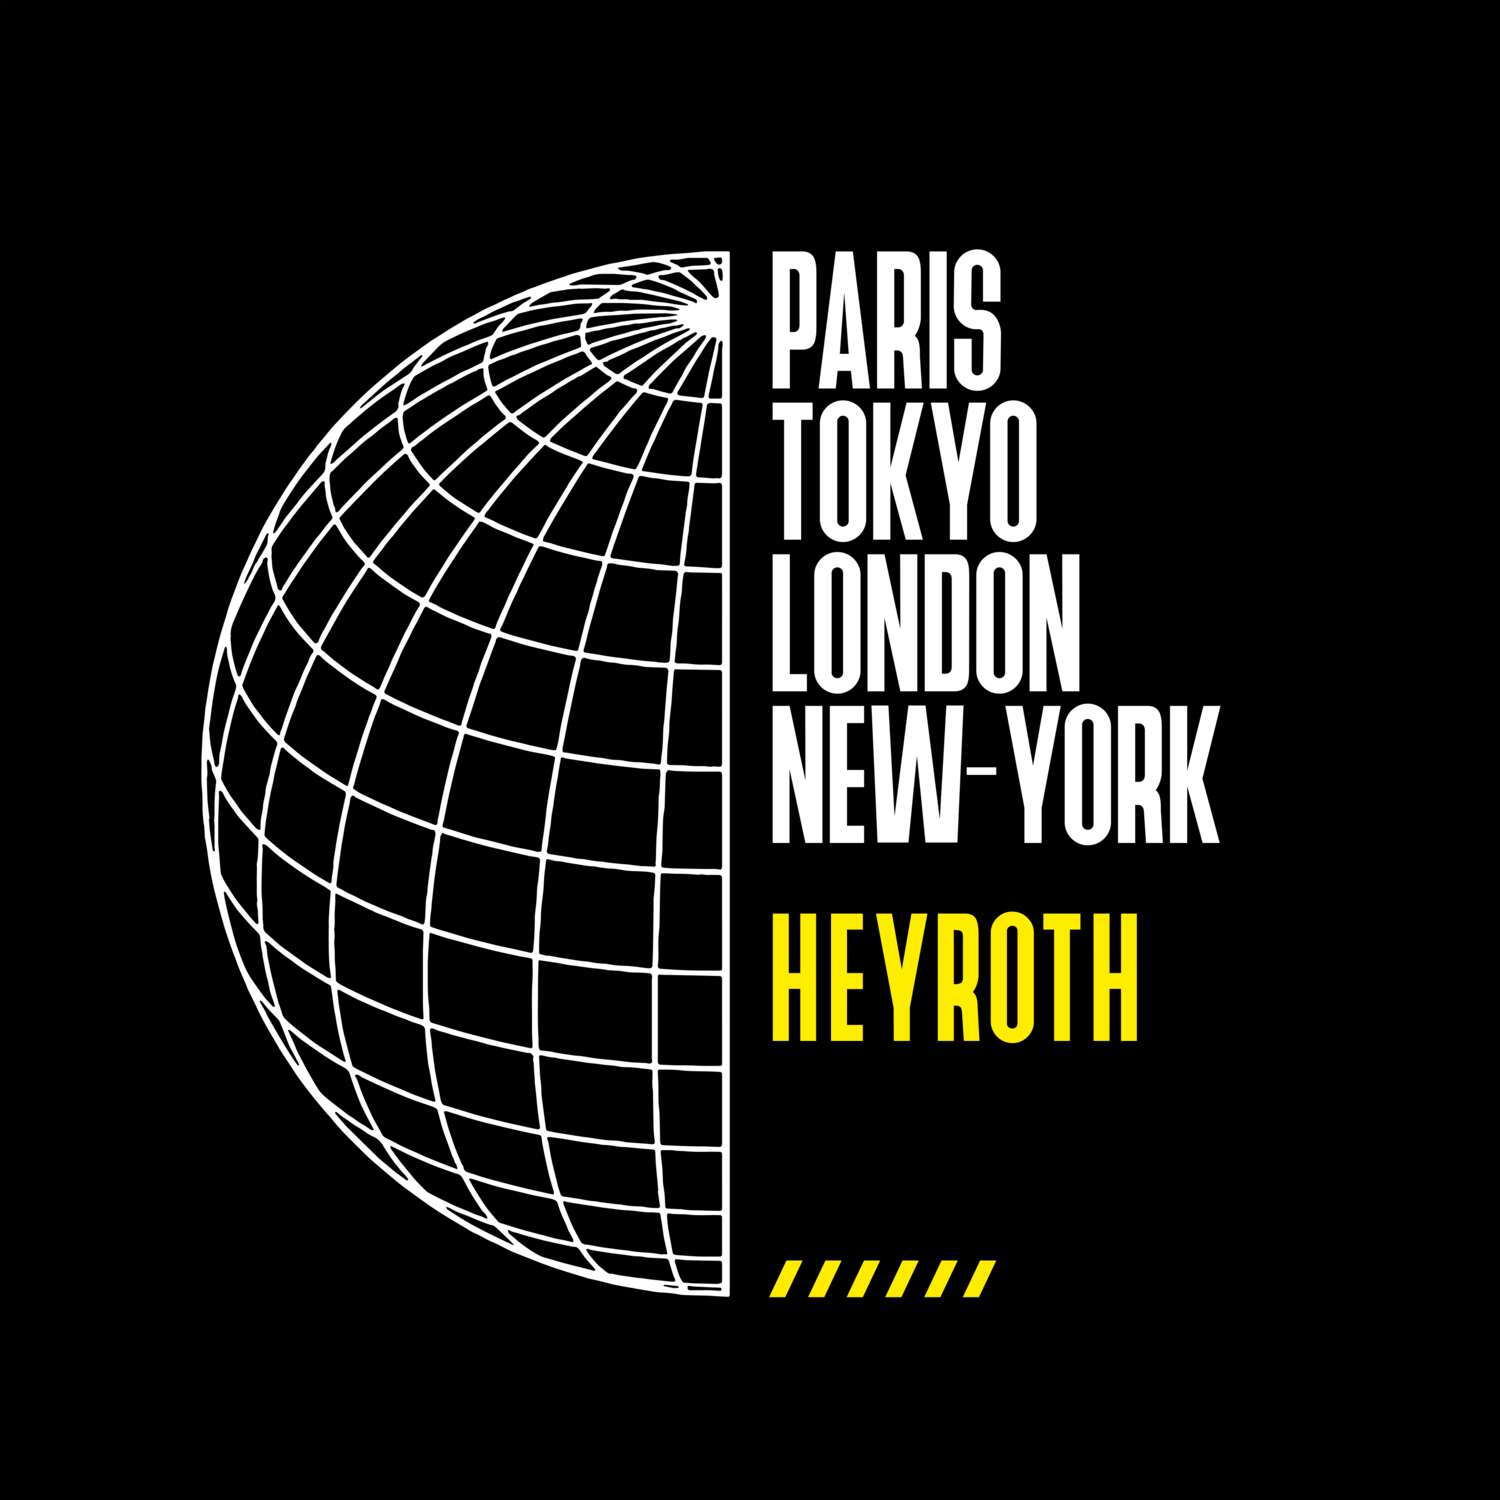 Heyroth T-Shirt »Paris Tokyo London«